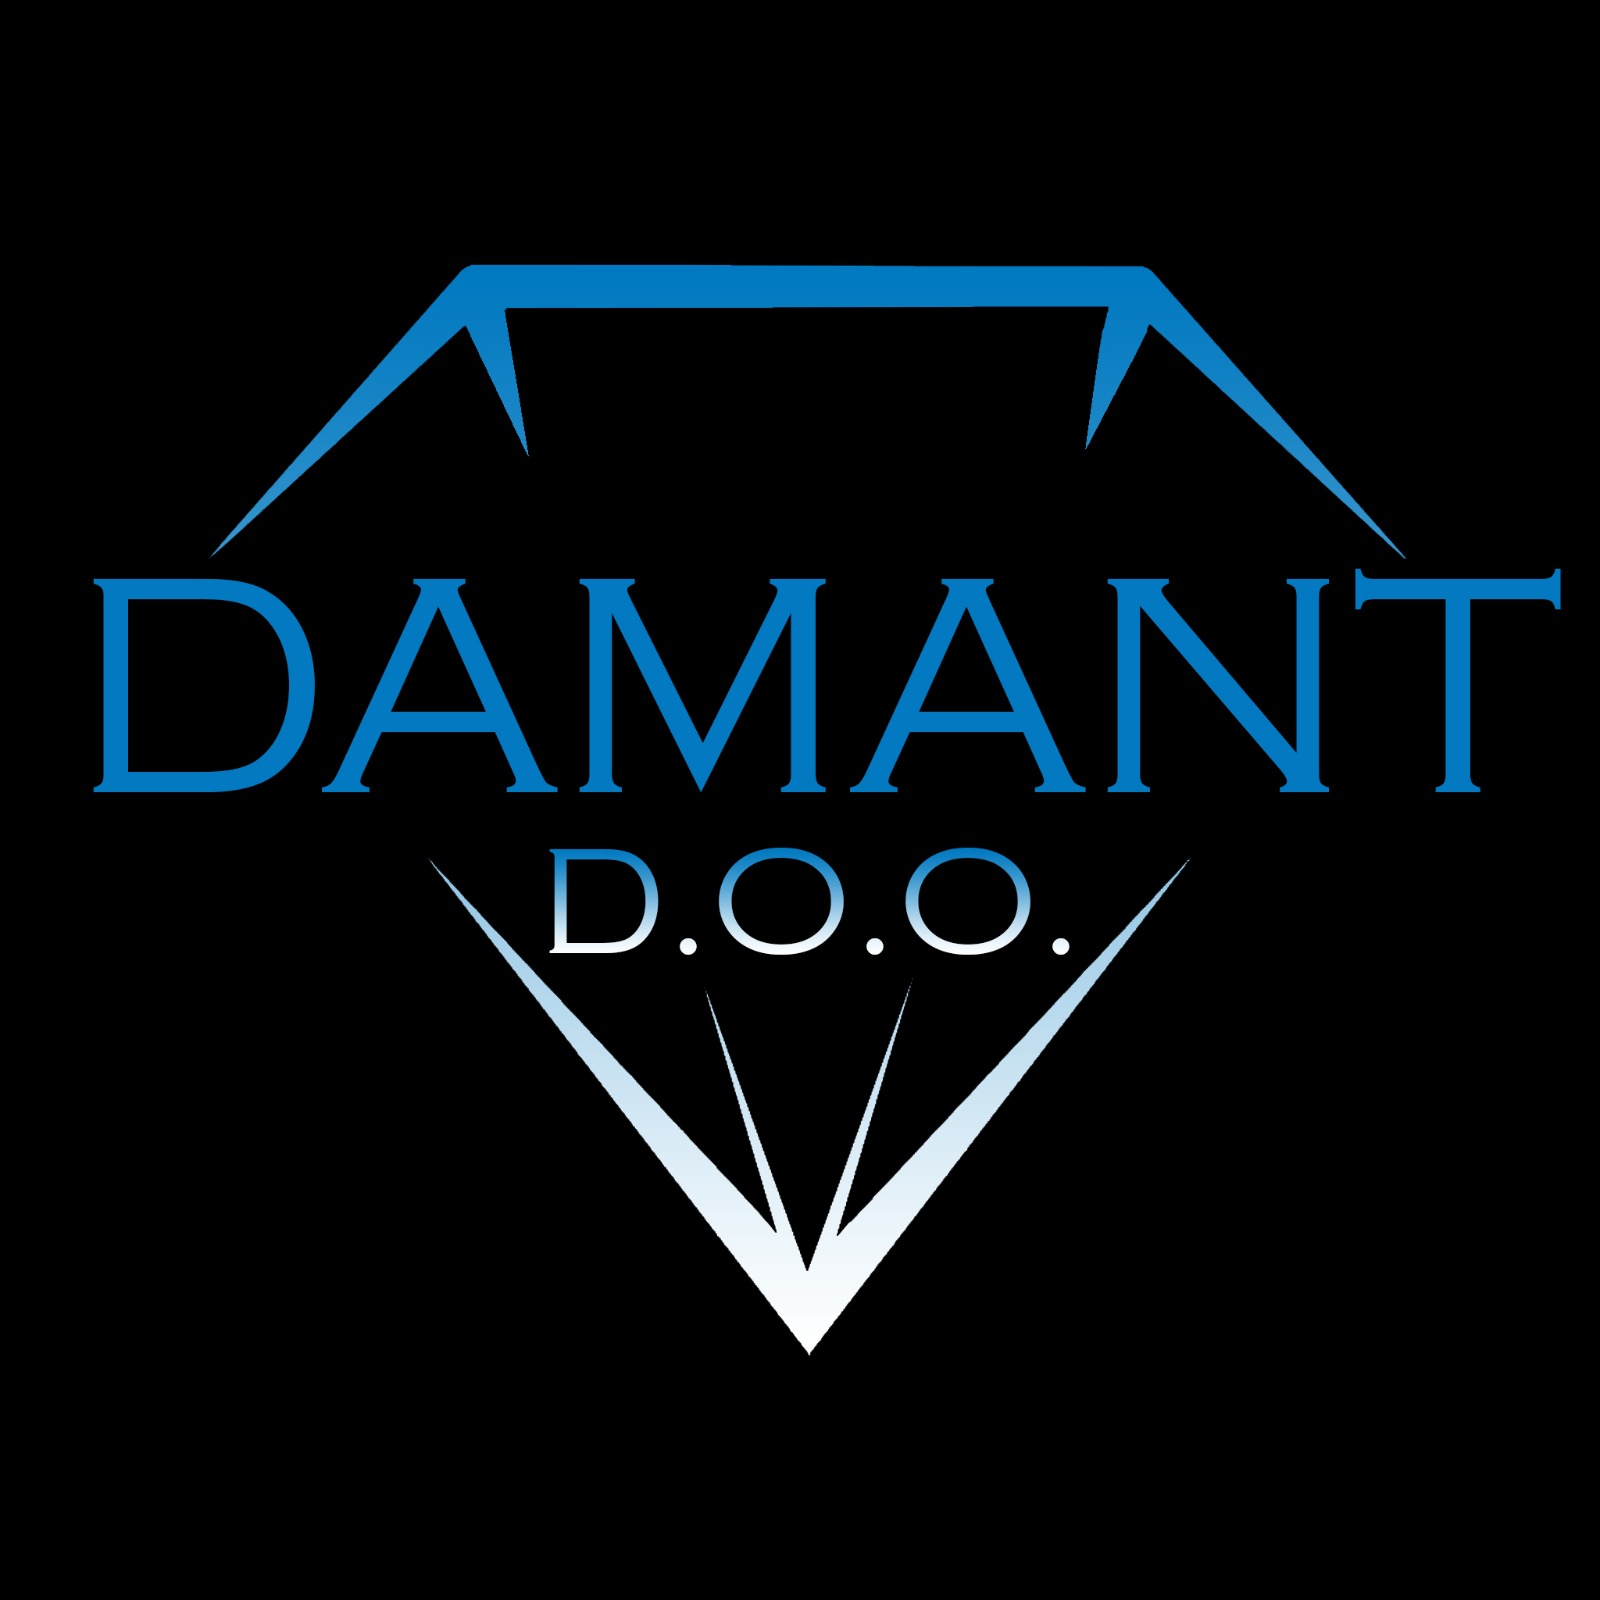 DAMANT D.O.O.